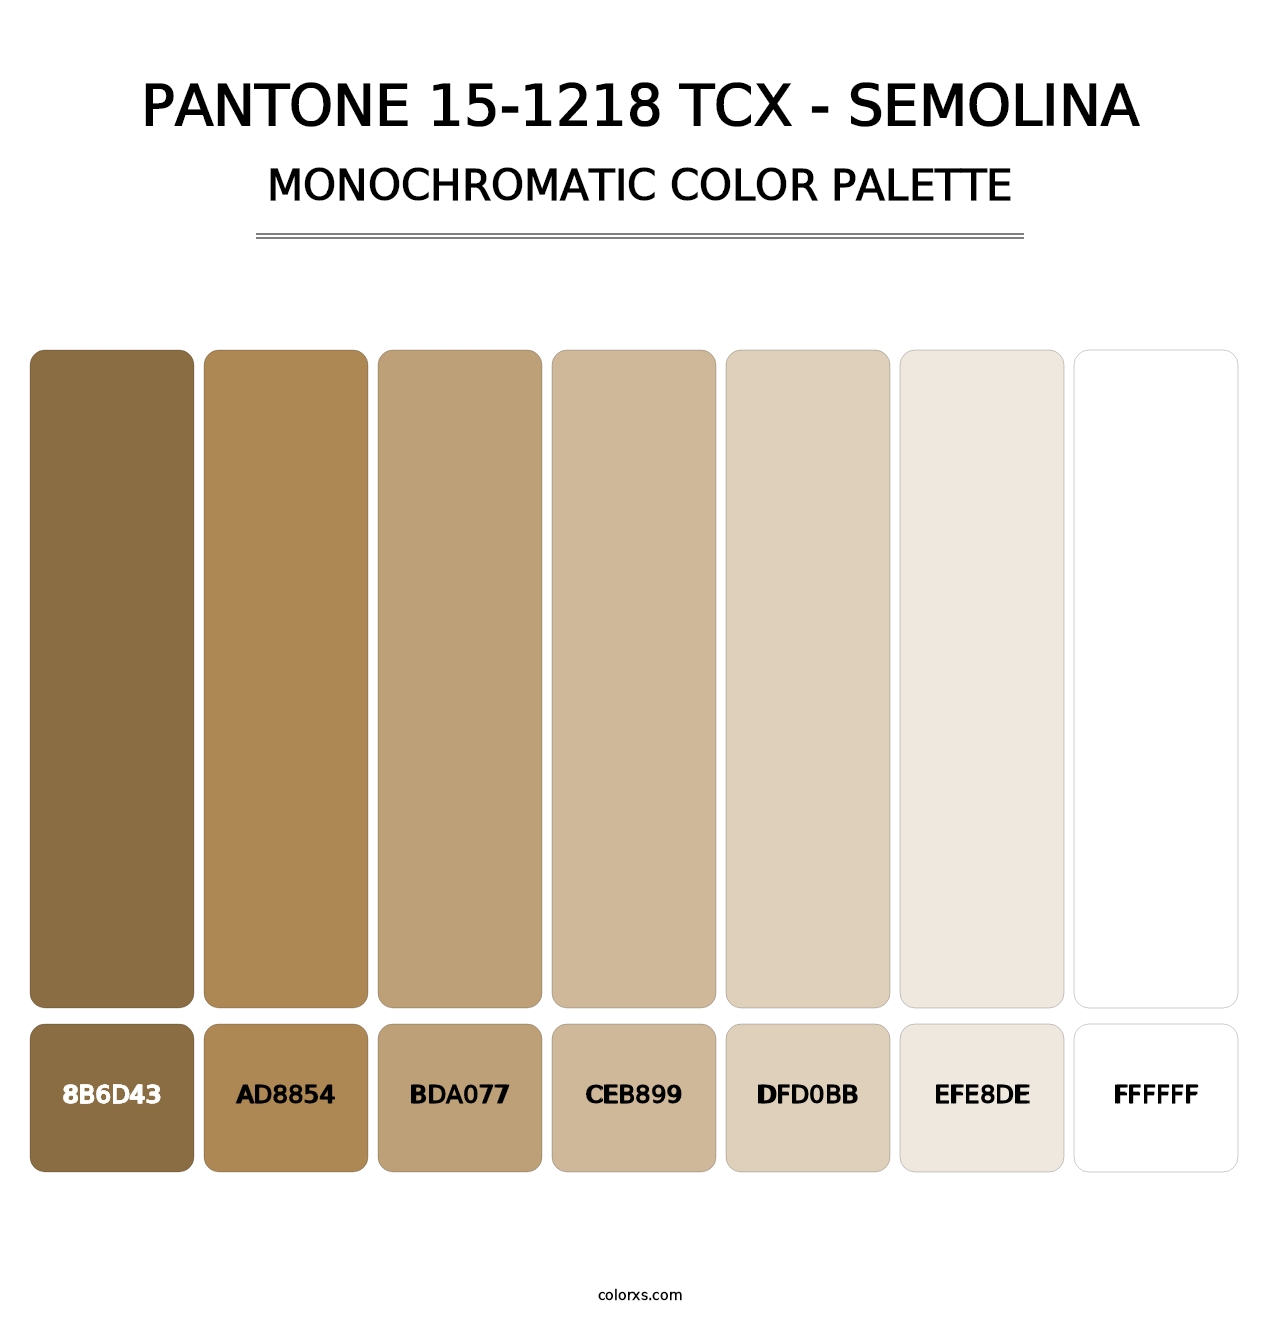 PANTONE 15-1218 TCX - Semolina - Monochromatic Color Palette